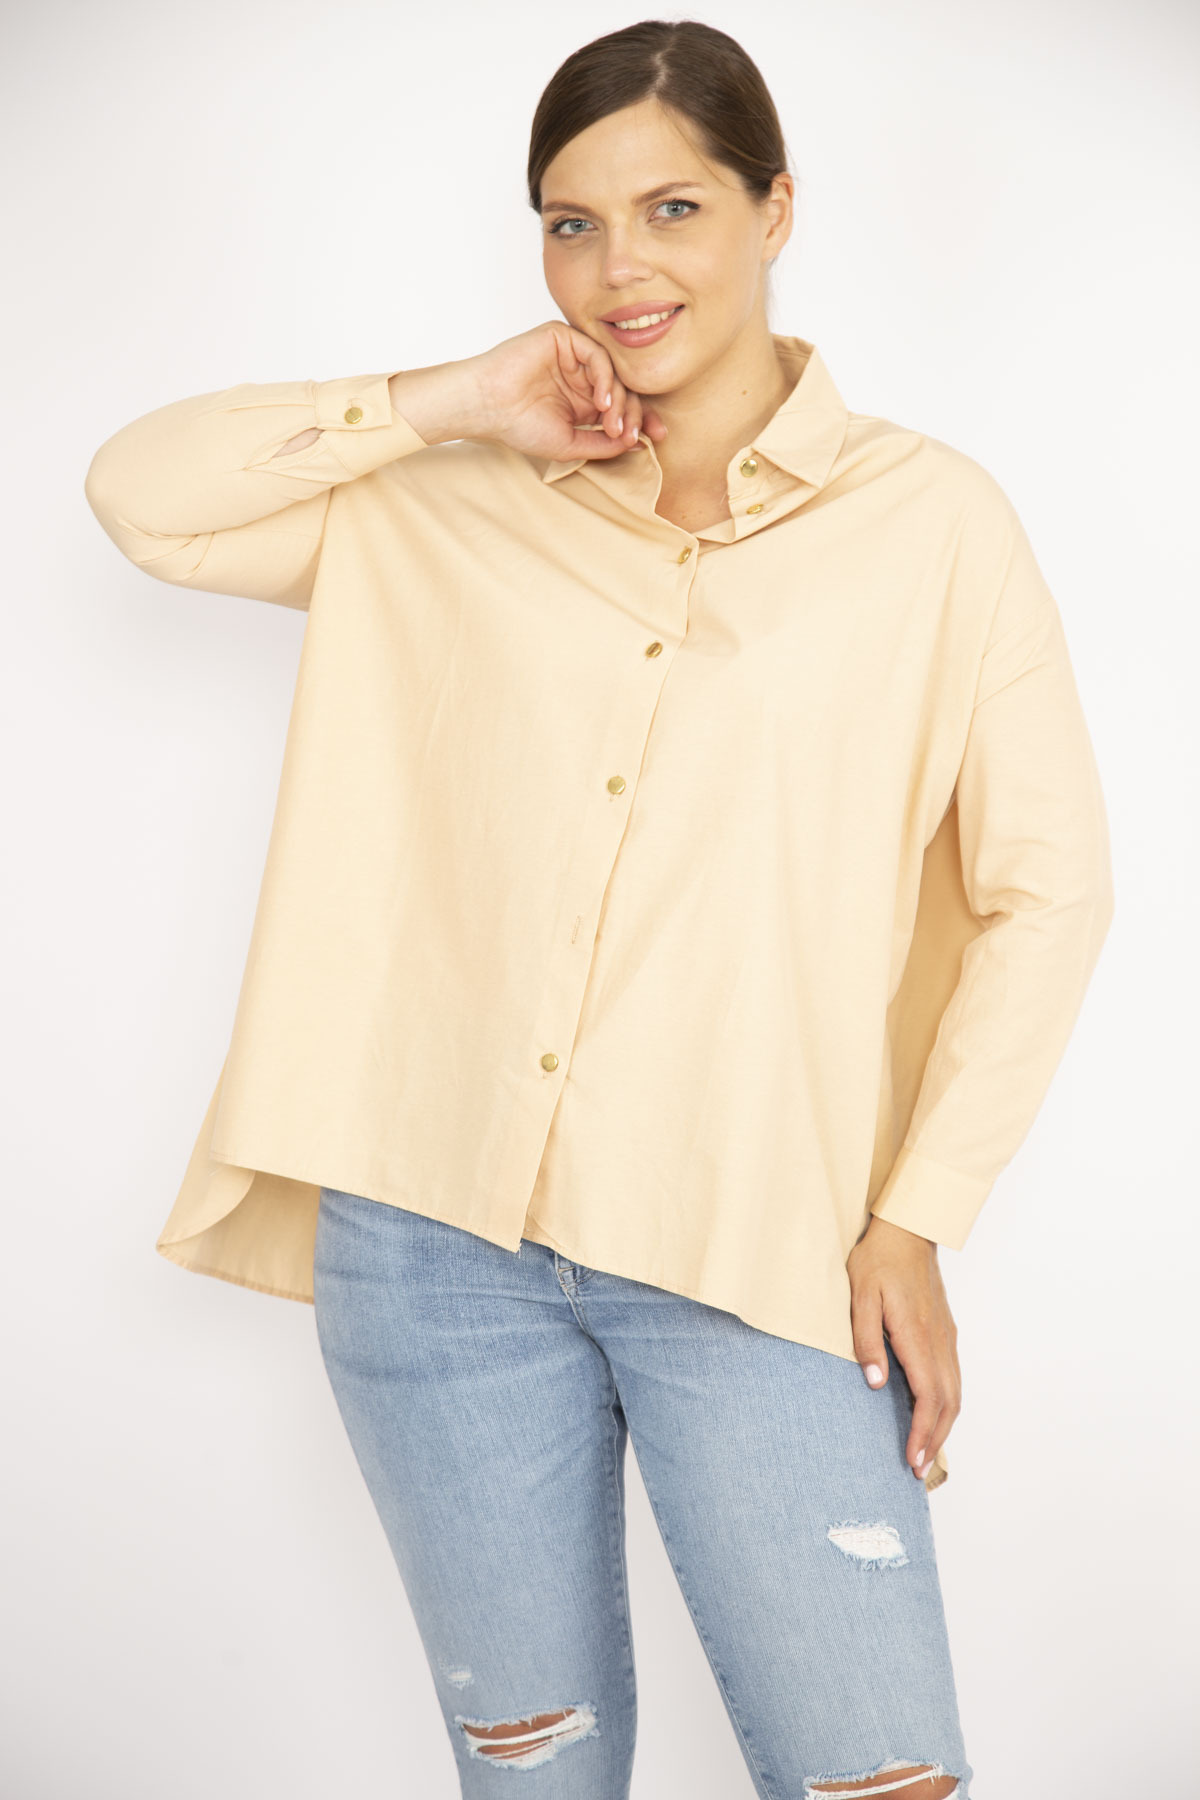 Şans Women's Plus Size Beige Poplin Fabric Long Sleeve Shirt with Buttons and Side Slits